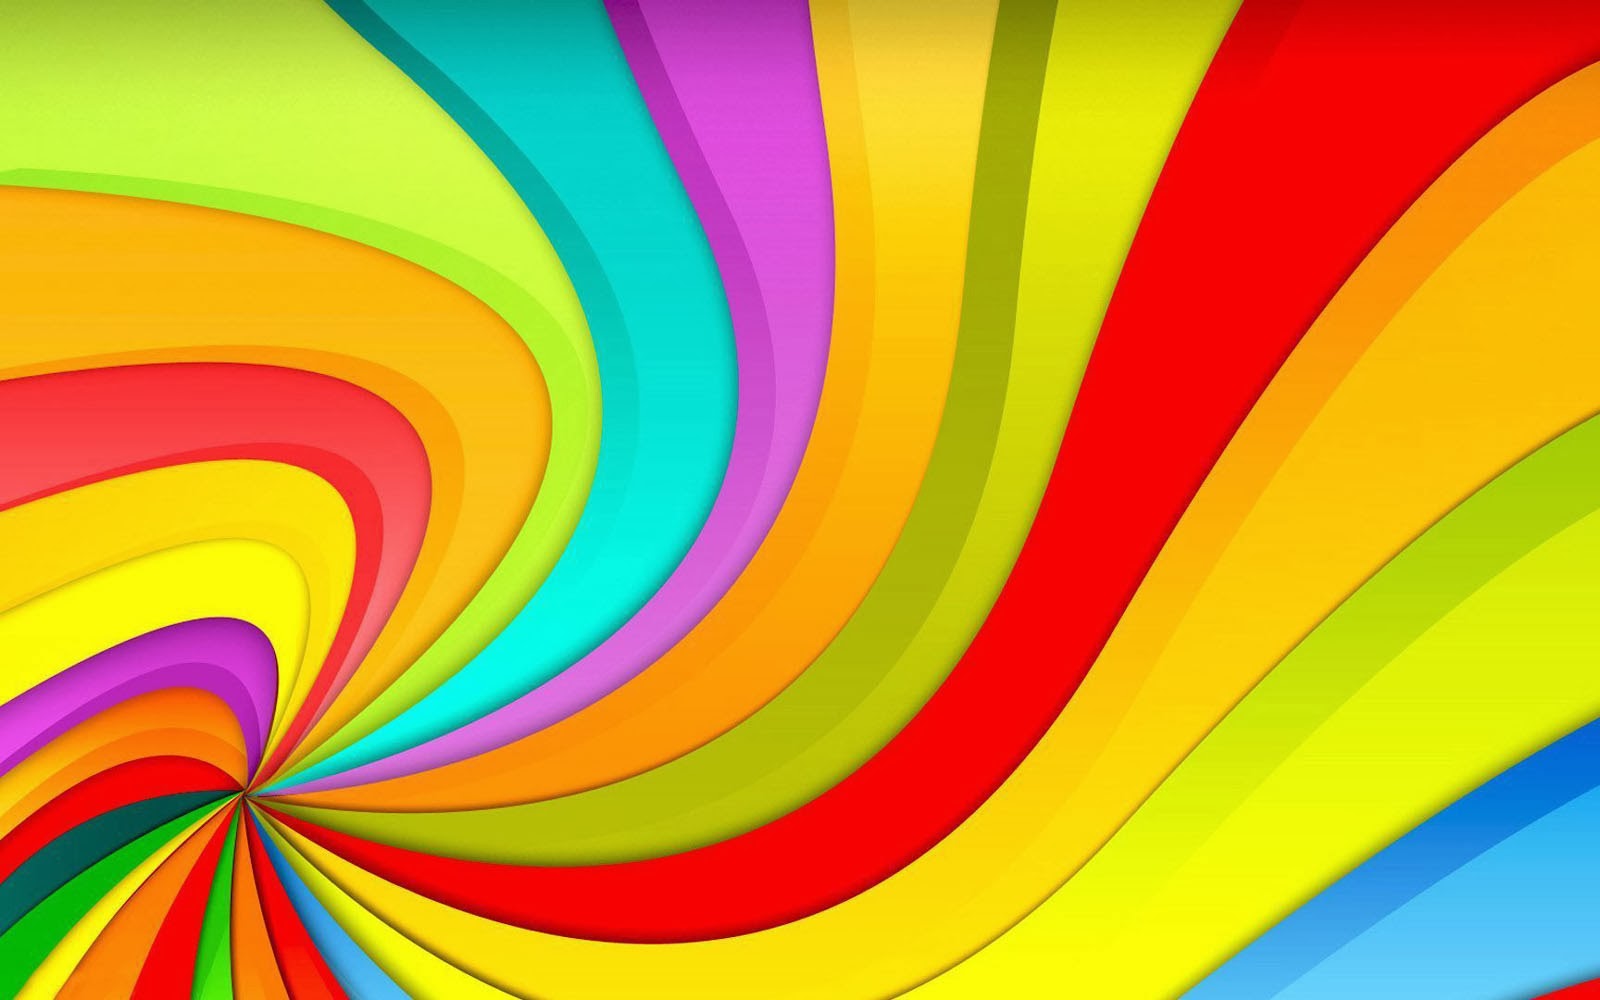 Clovisso Wallpaper Gallery: Colorful Swirls Wallpaper